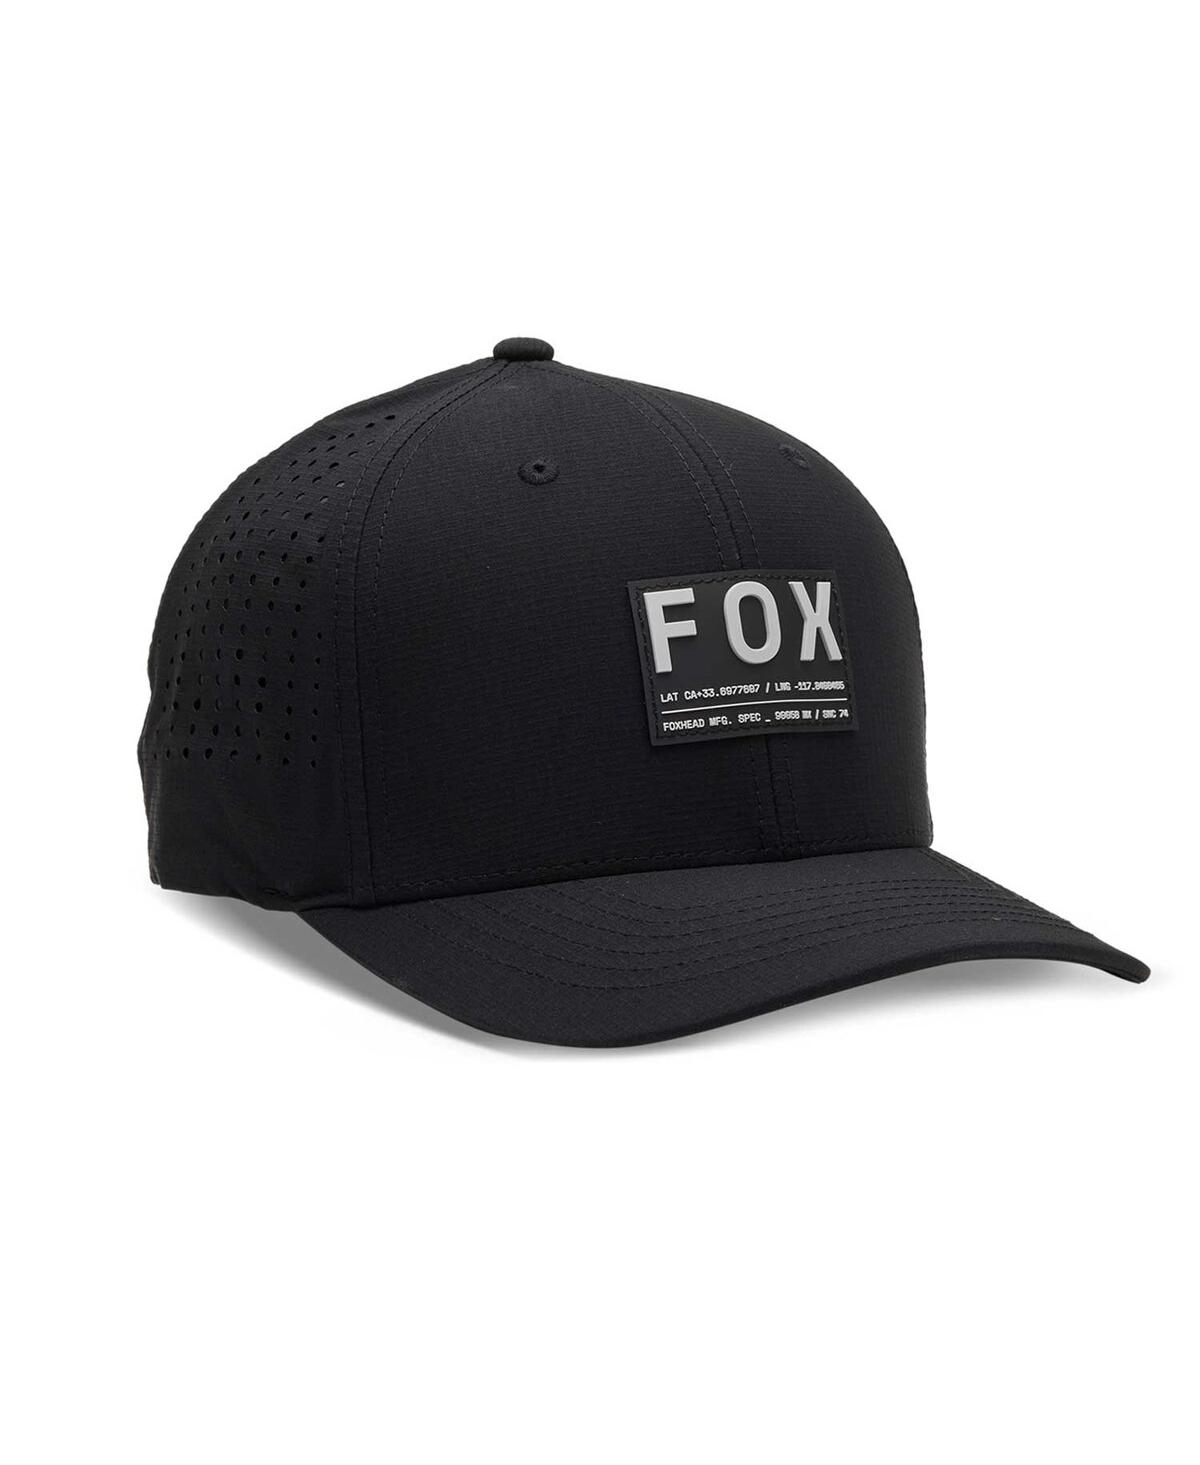 FOX MEN'S FOX BLACK NON-STOP TECH FLEX HAT